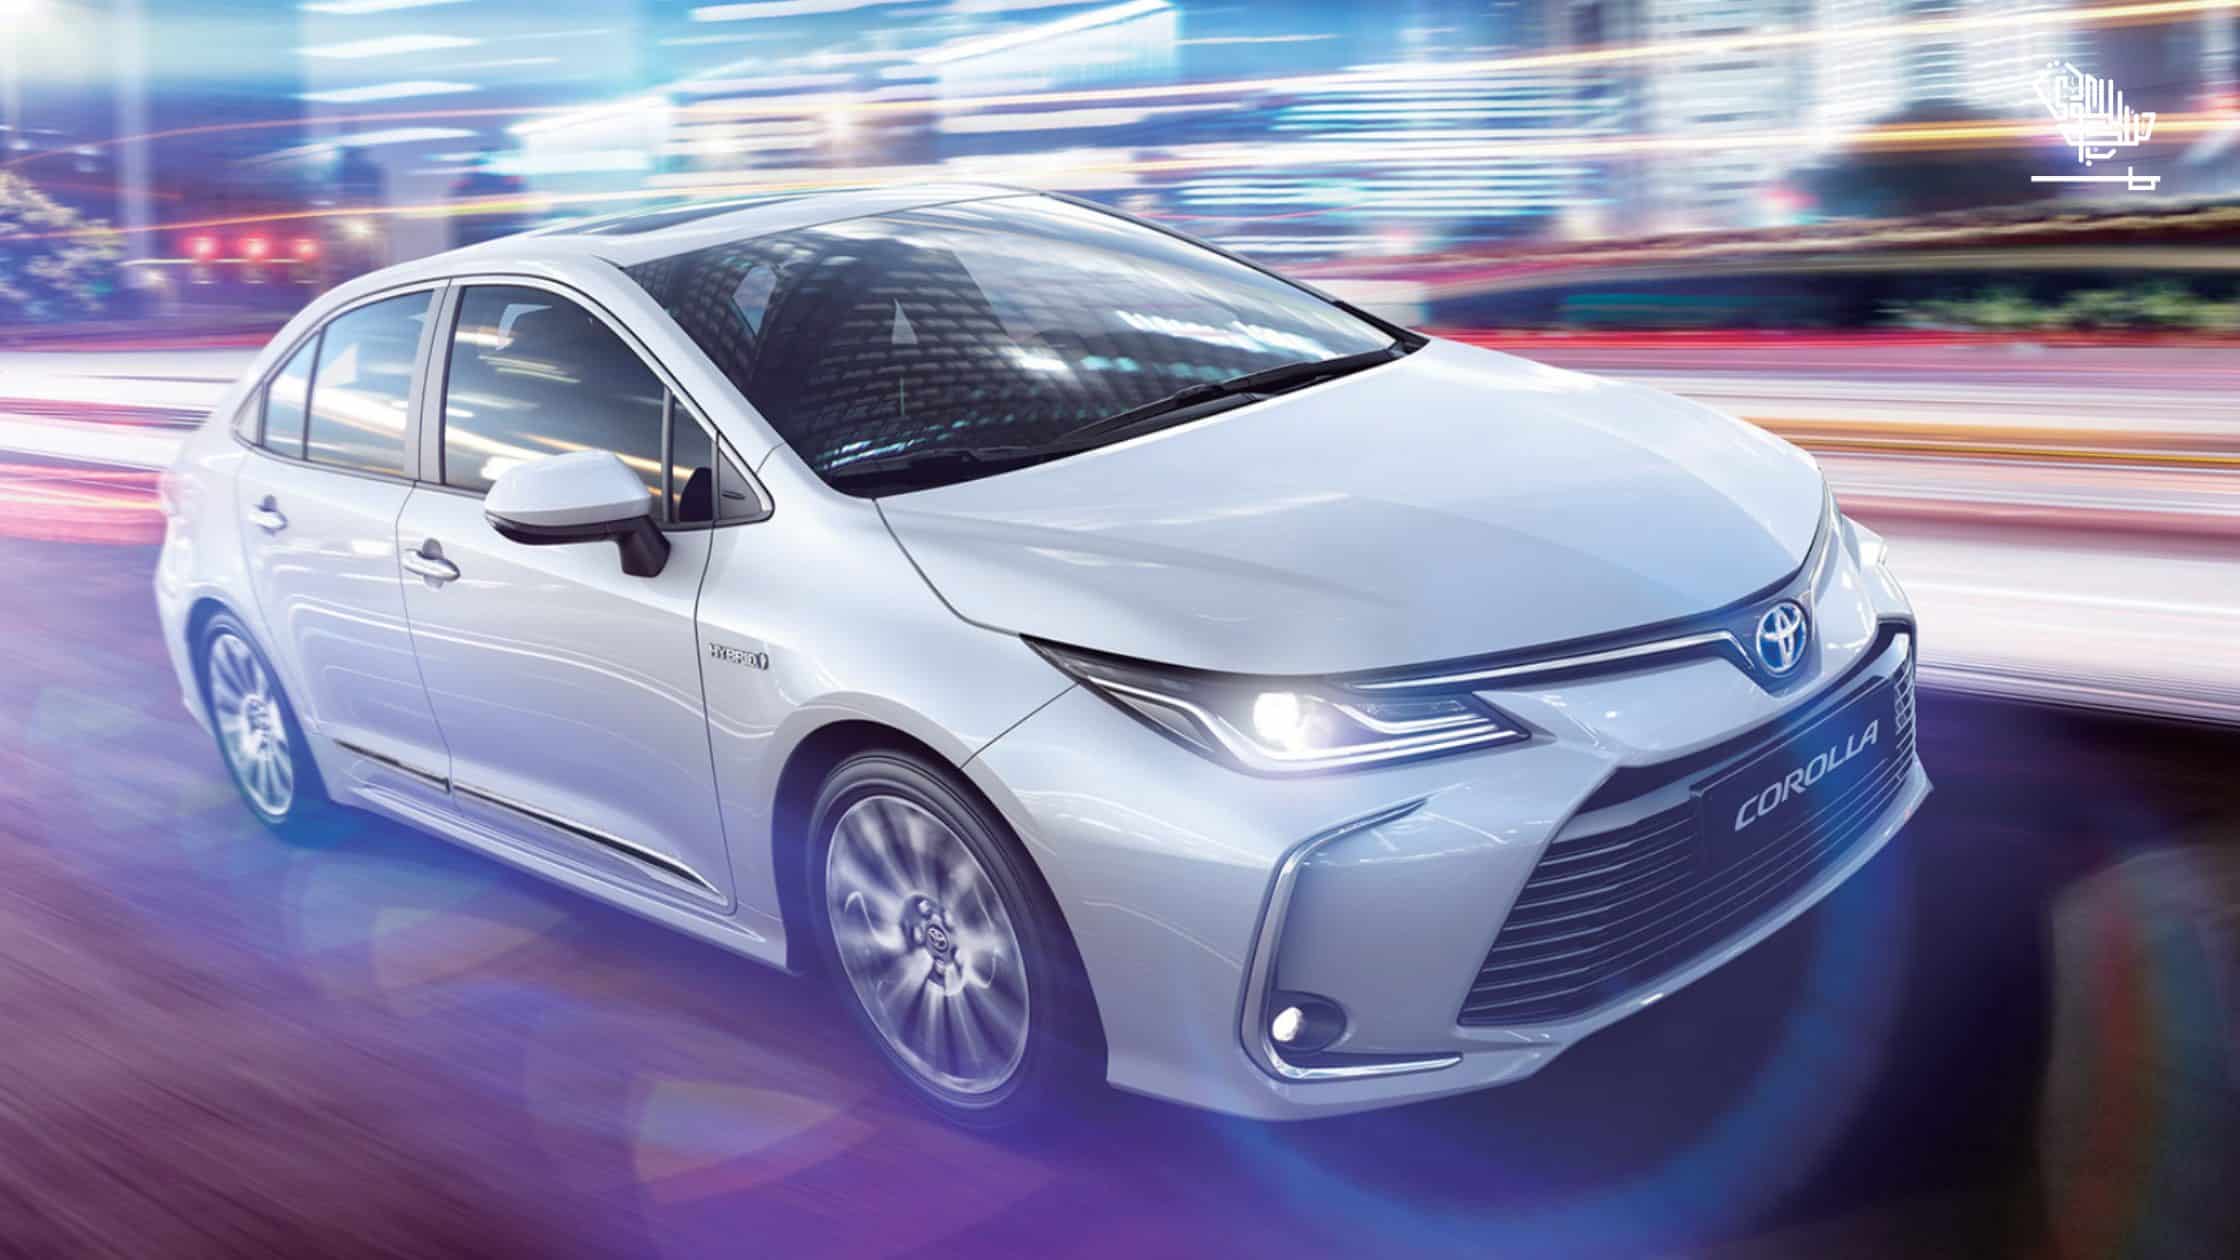 Toyota yaris 2021 price in ksa